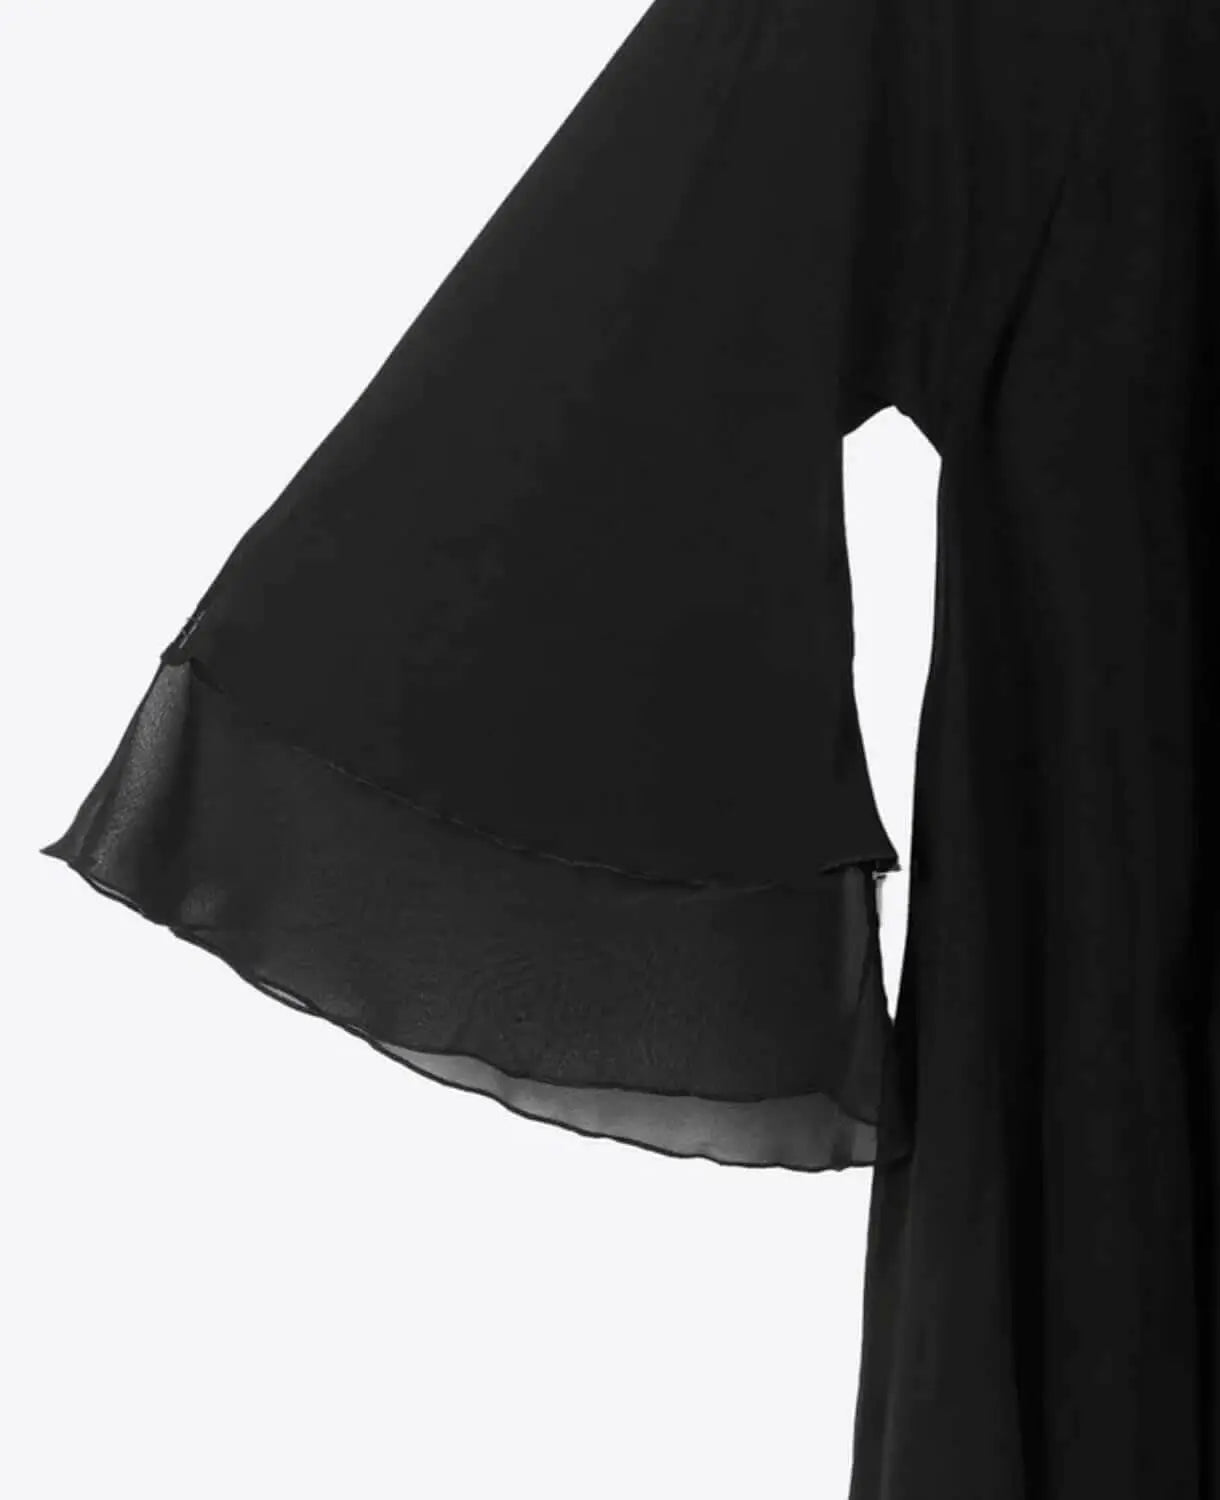 Women's Abaya - Flare Style Abaya. 3 Layers Cut. Latest Trend